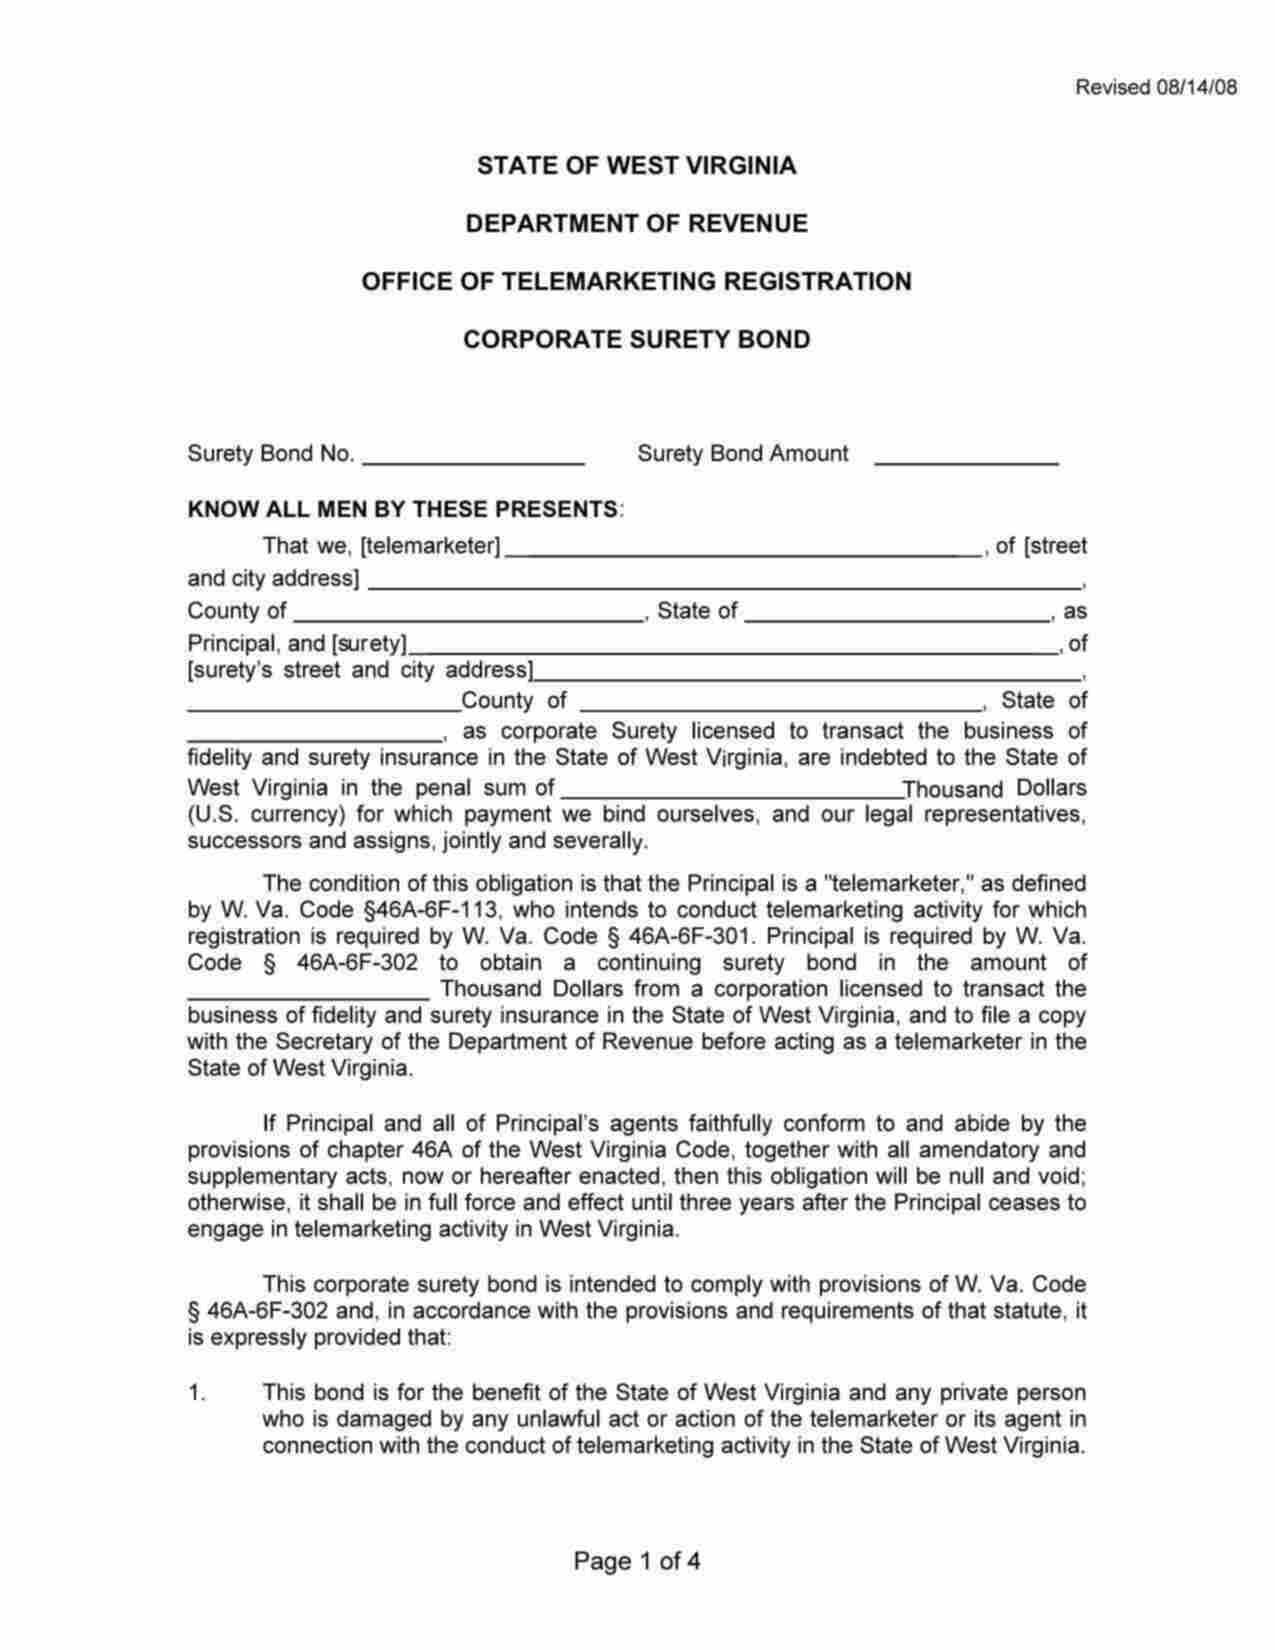 West Virginia Telemarketer Registration Bond Form